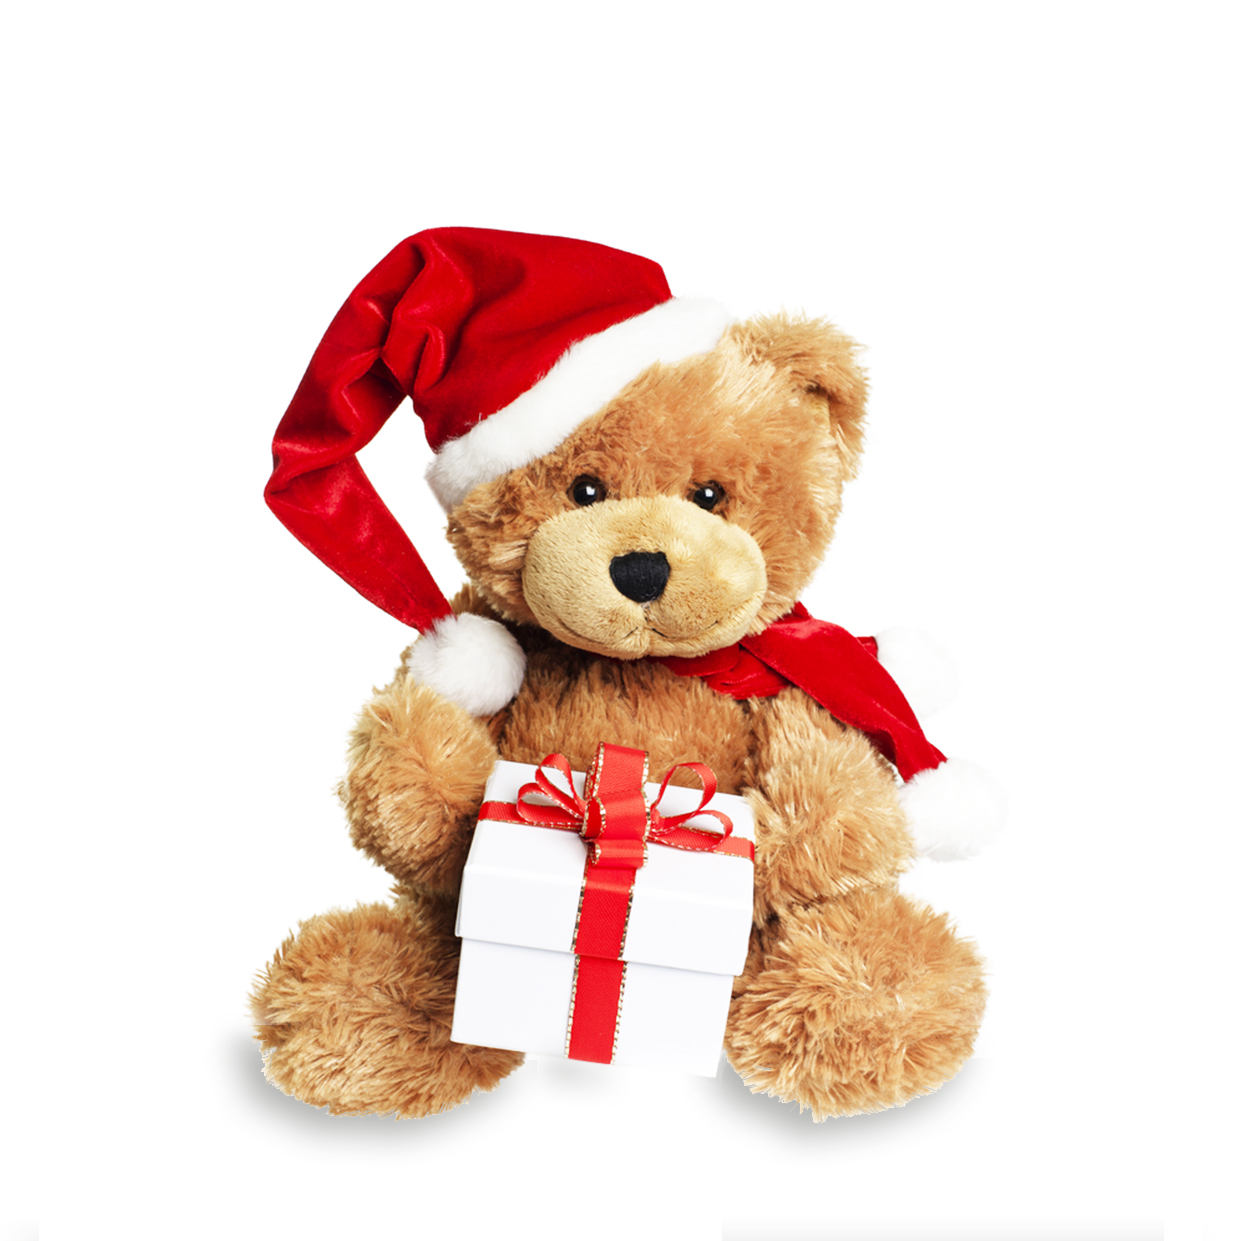 Christmas Teddy - sent on December 4th, 2022